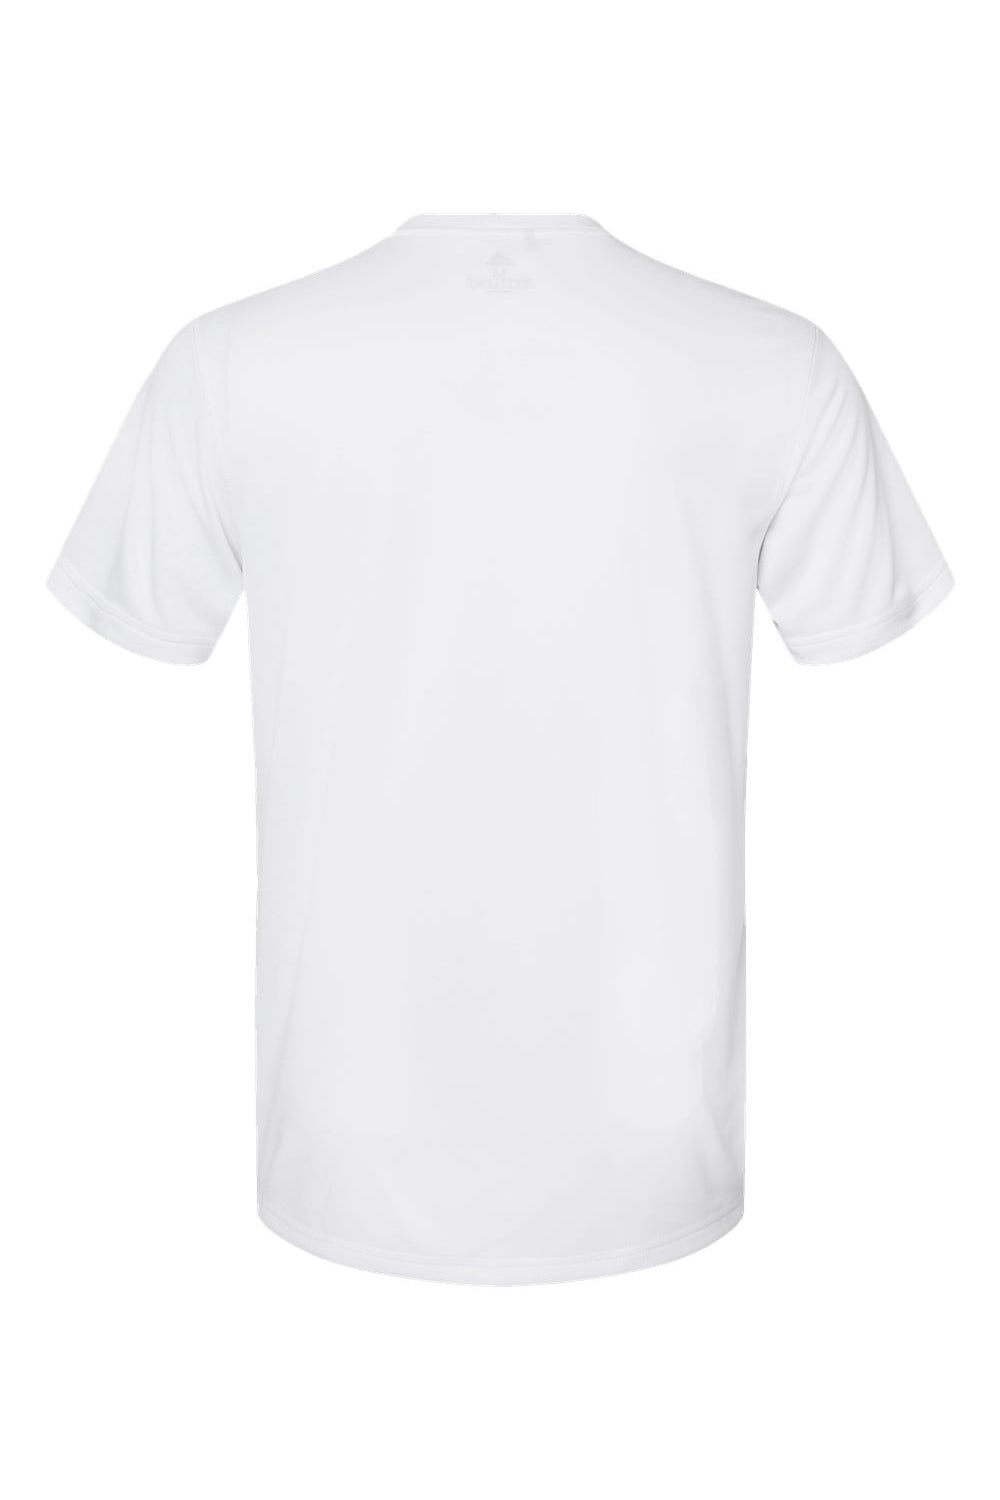 Adidas A376 Mens UPF 50+ Short Sleeve Crewneck T-Shirt White Flat Back